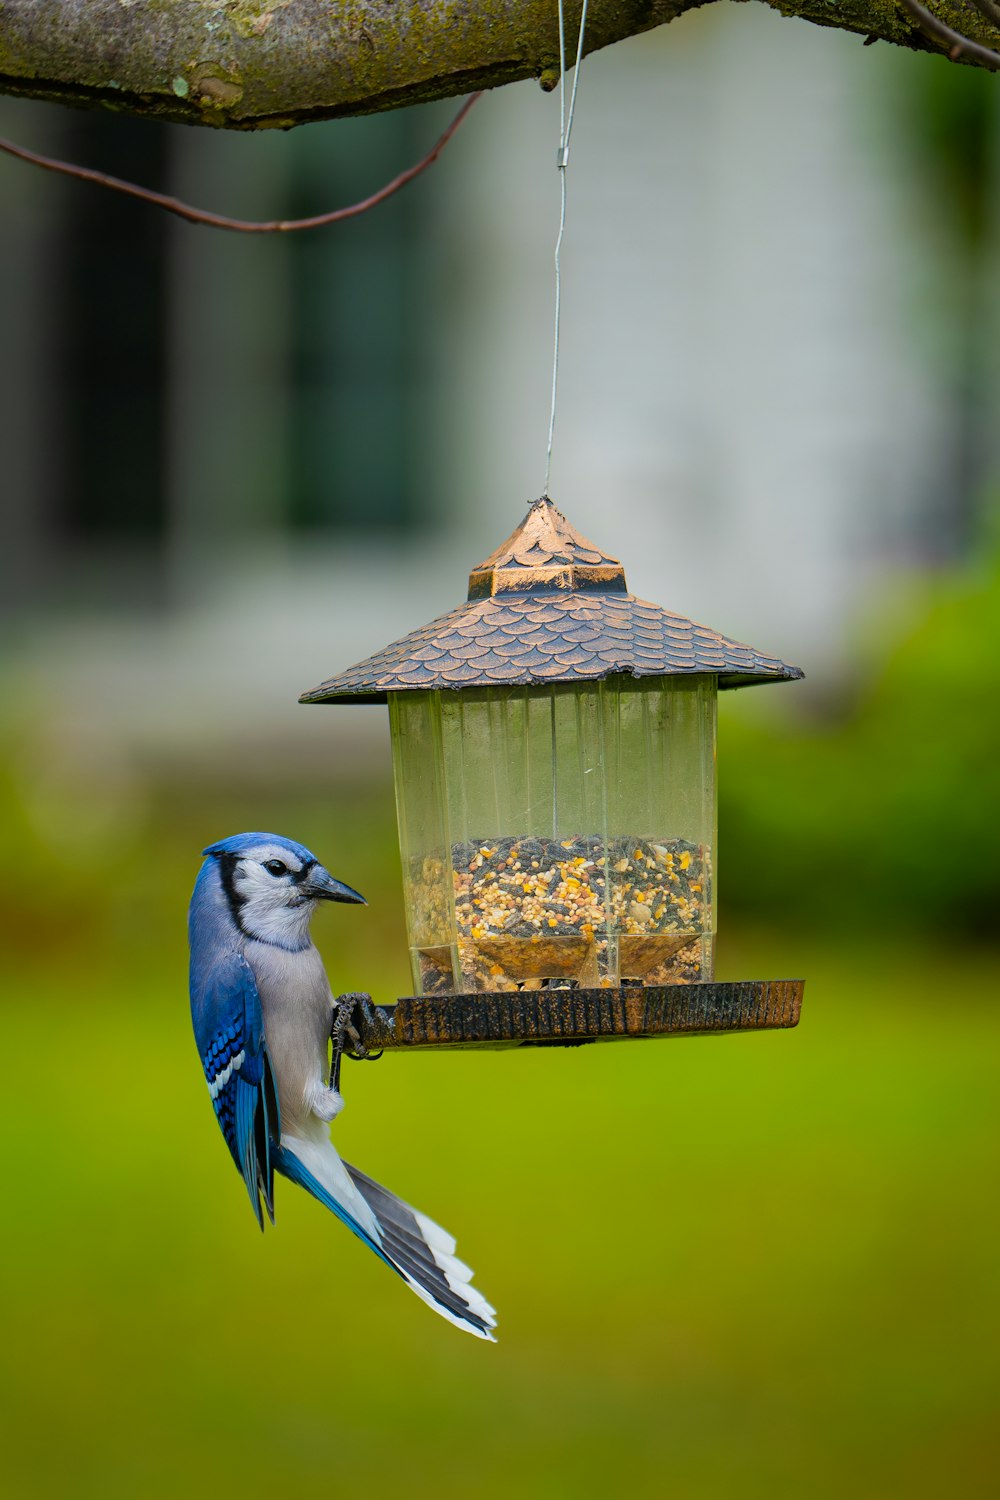 a blue bird perched on a bird feeder